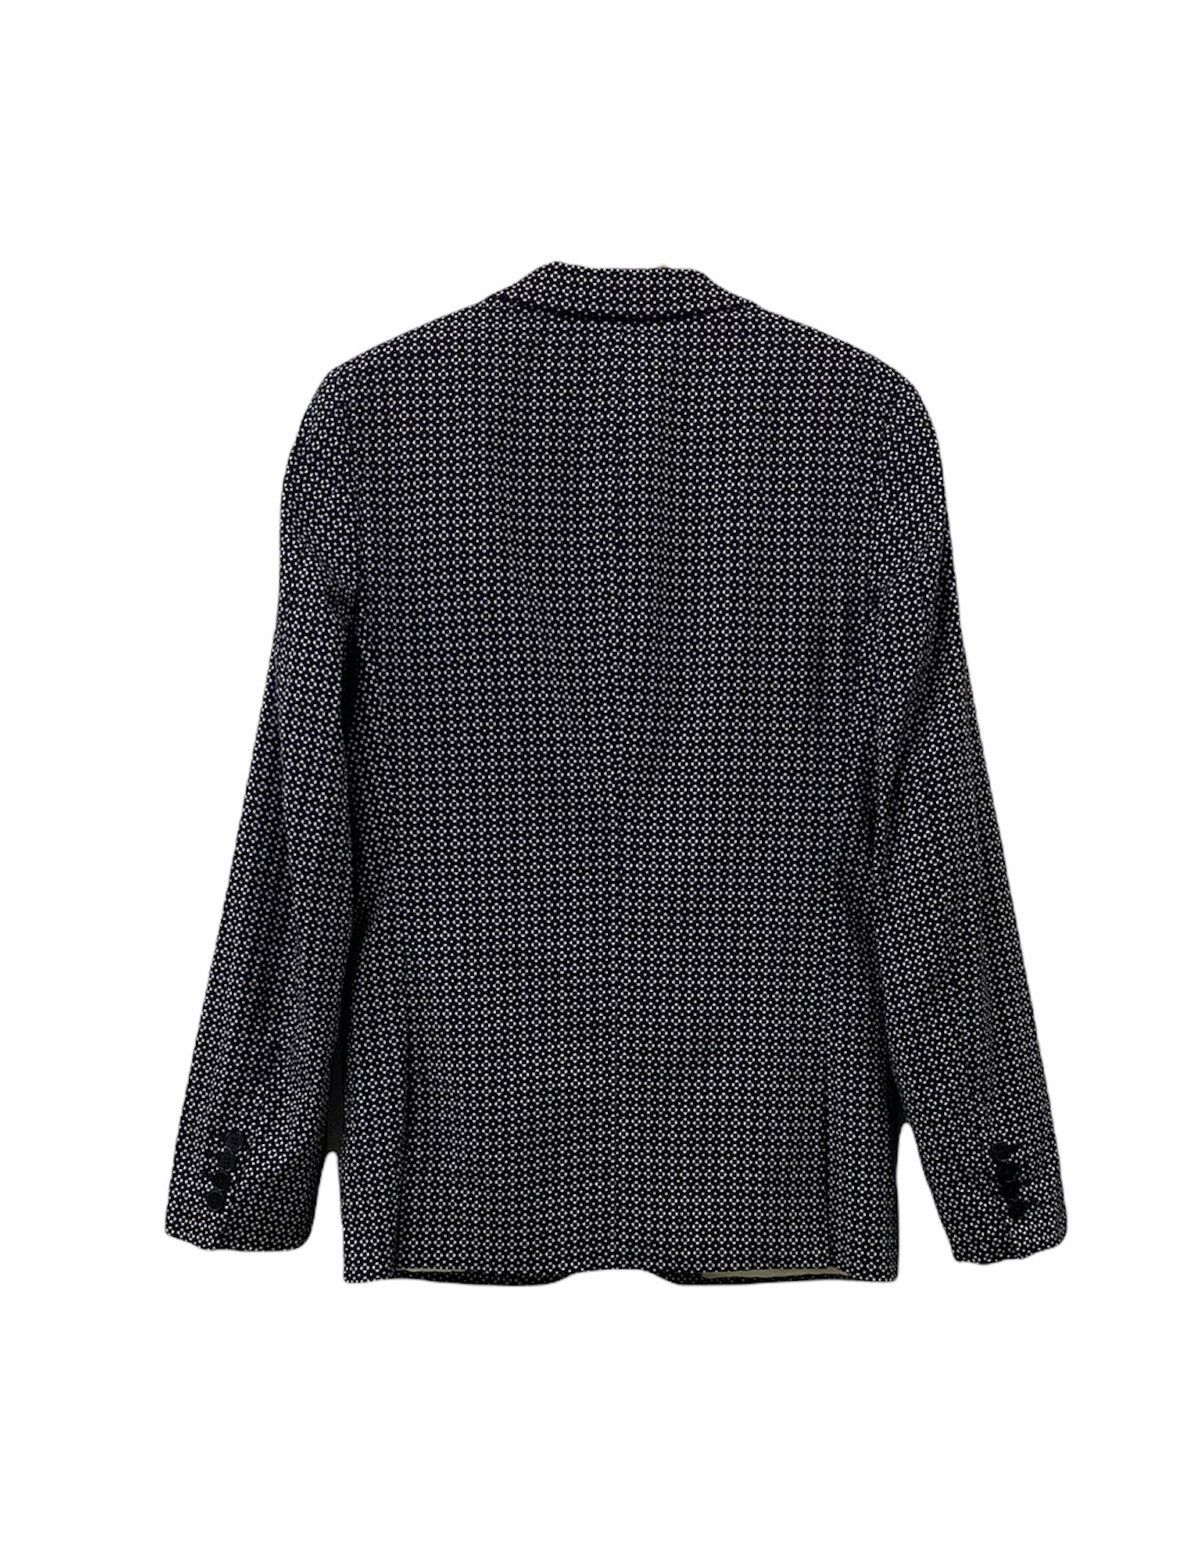 Rare🌑Paul Smith Uk Blazer Style Jacket Geometric Design - 2